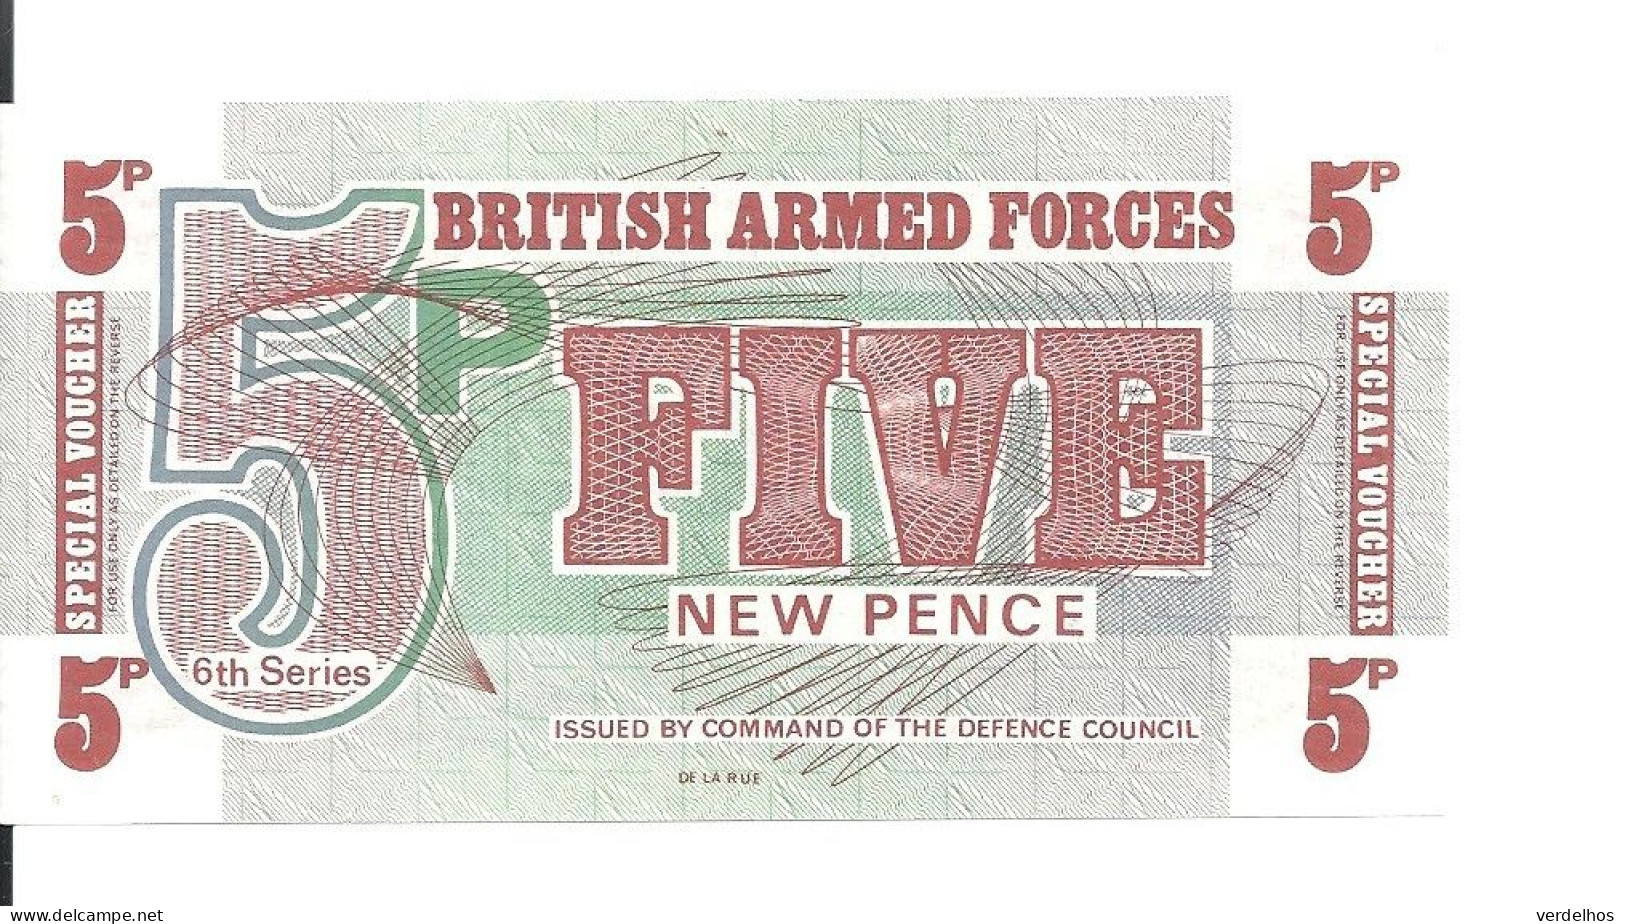 GRANDE BRETAGNE 5 PENCE UNC - British Armed Forces & Special Vouchers